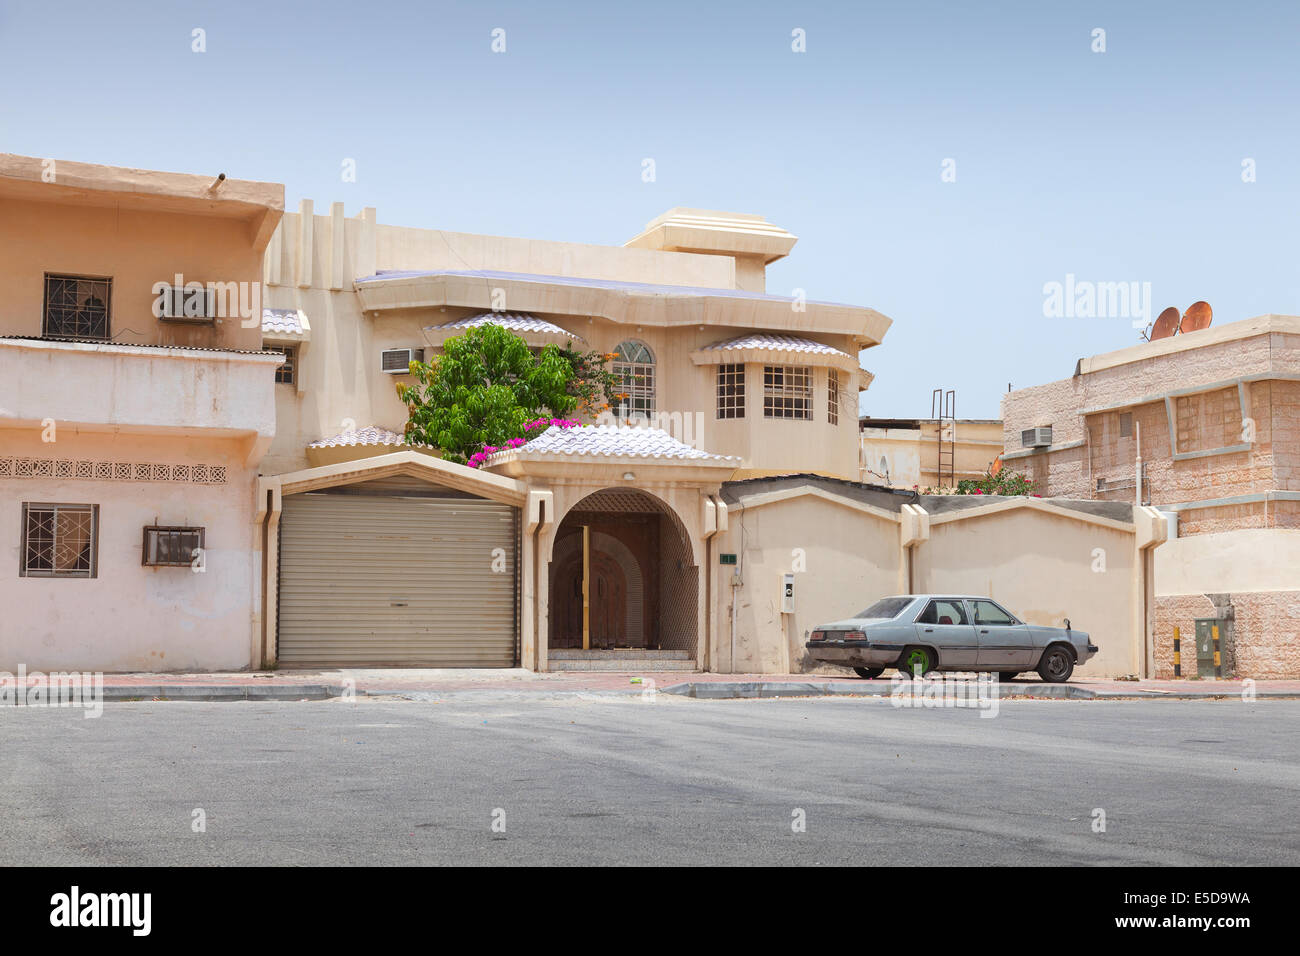 Street view with old parked car, Rahima town, Saudi Arabia Stock Photo